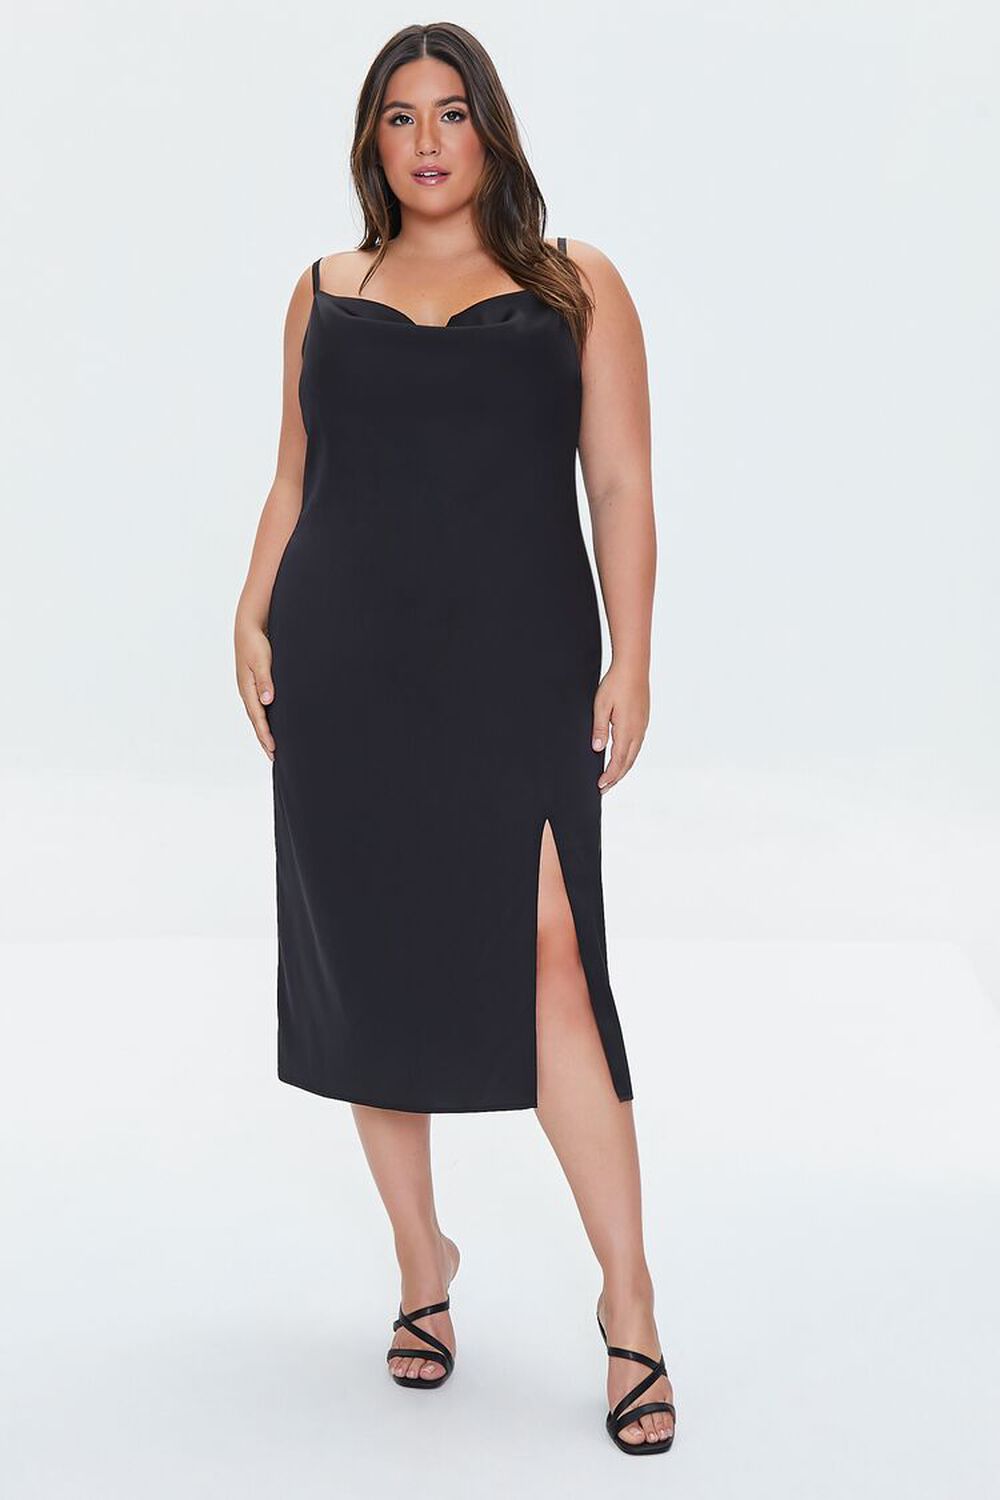 BLACK Plus Size Satin Cowl Slip Dress, image 1